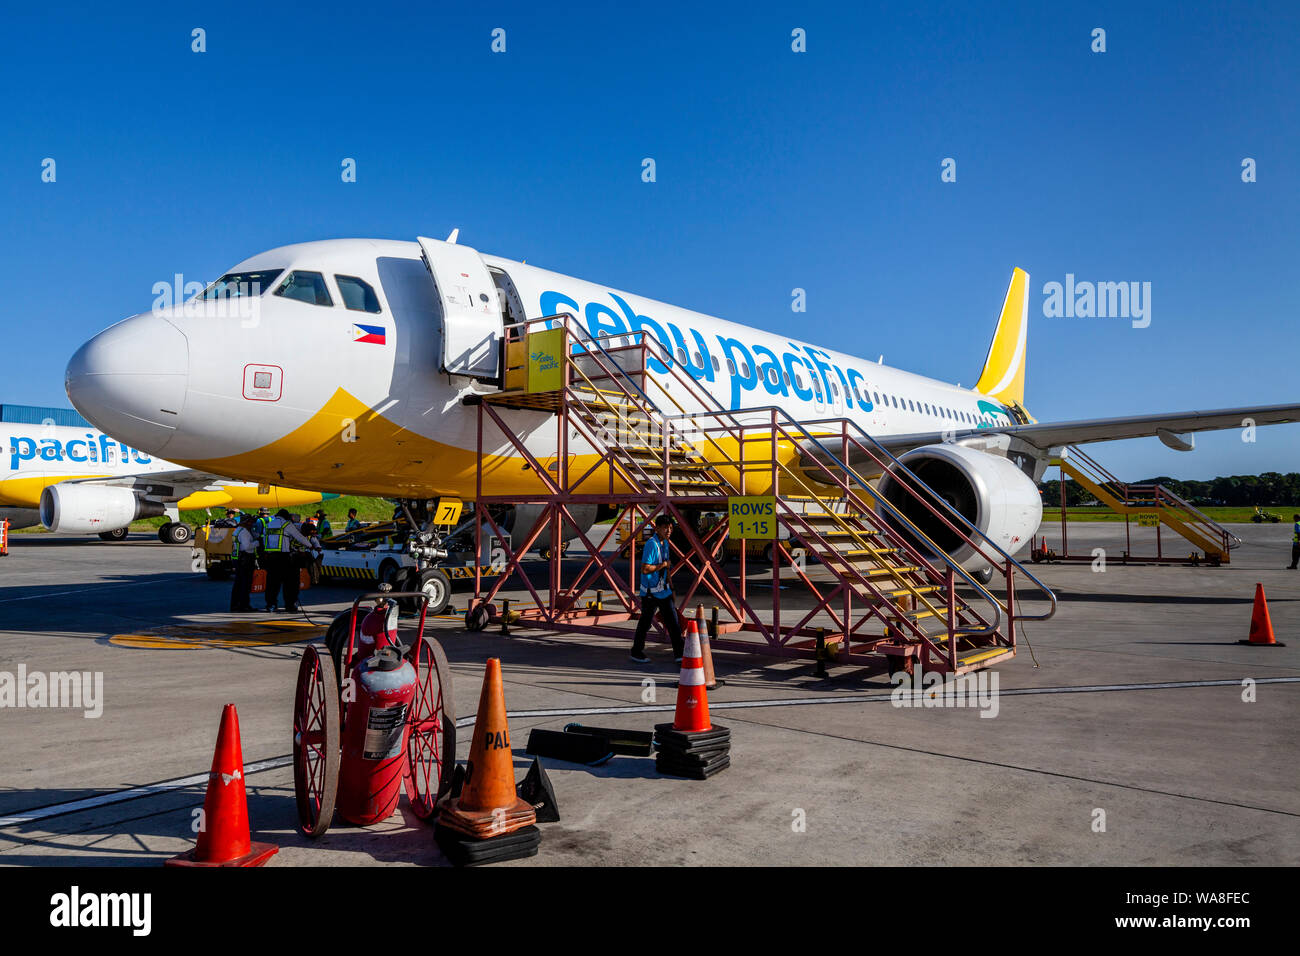 A Cebu Pacific Airplane At Puerto Princessa Airport, Palawan Island, The Philippines Stock Photo